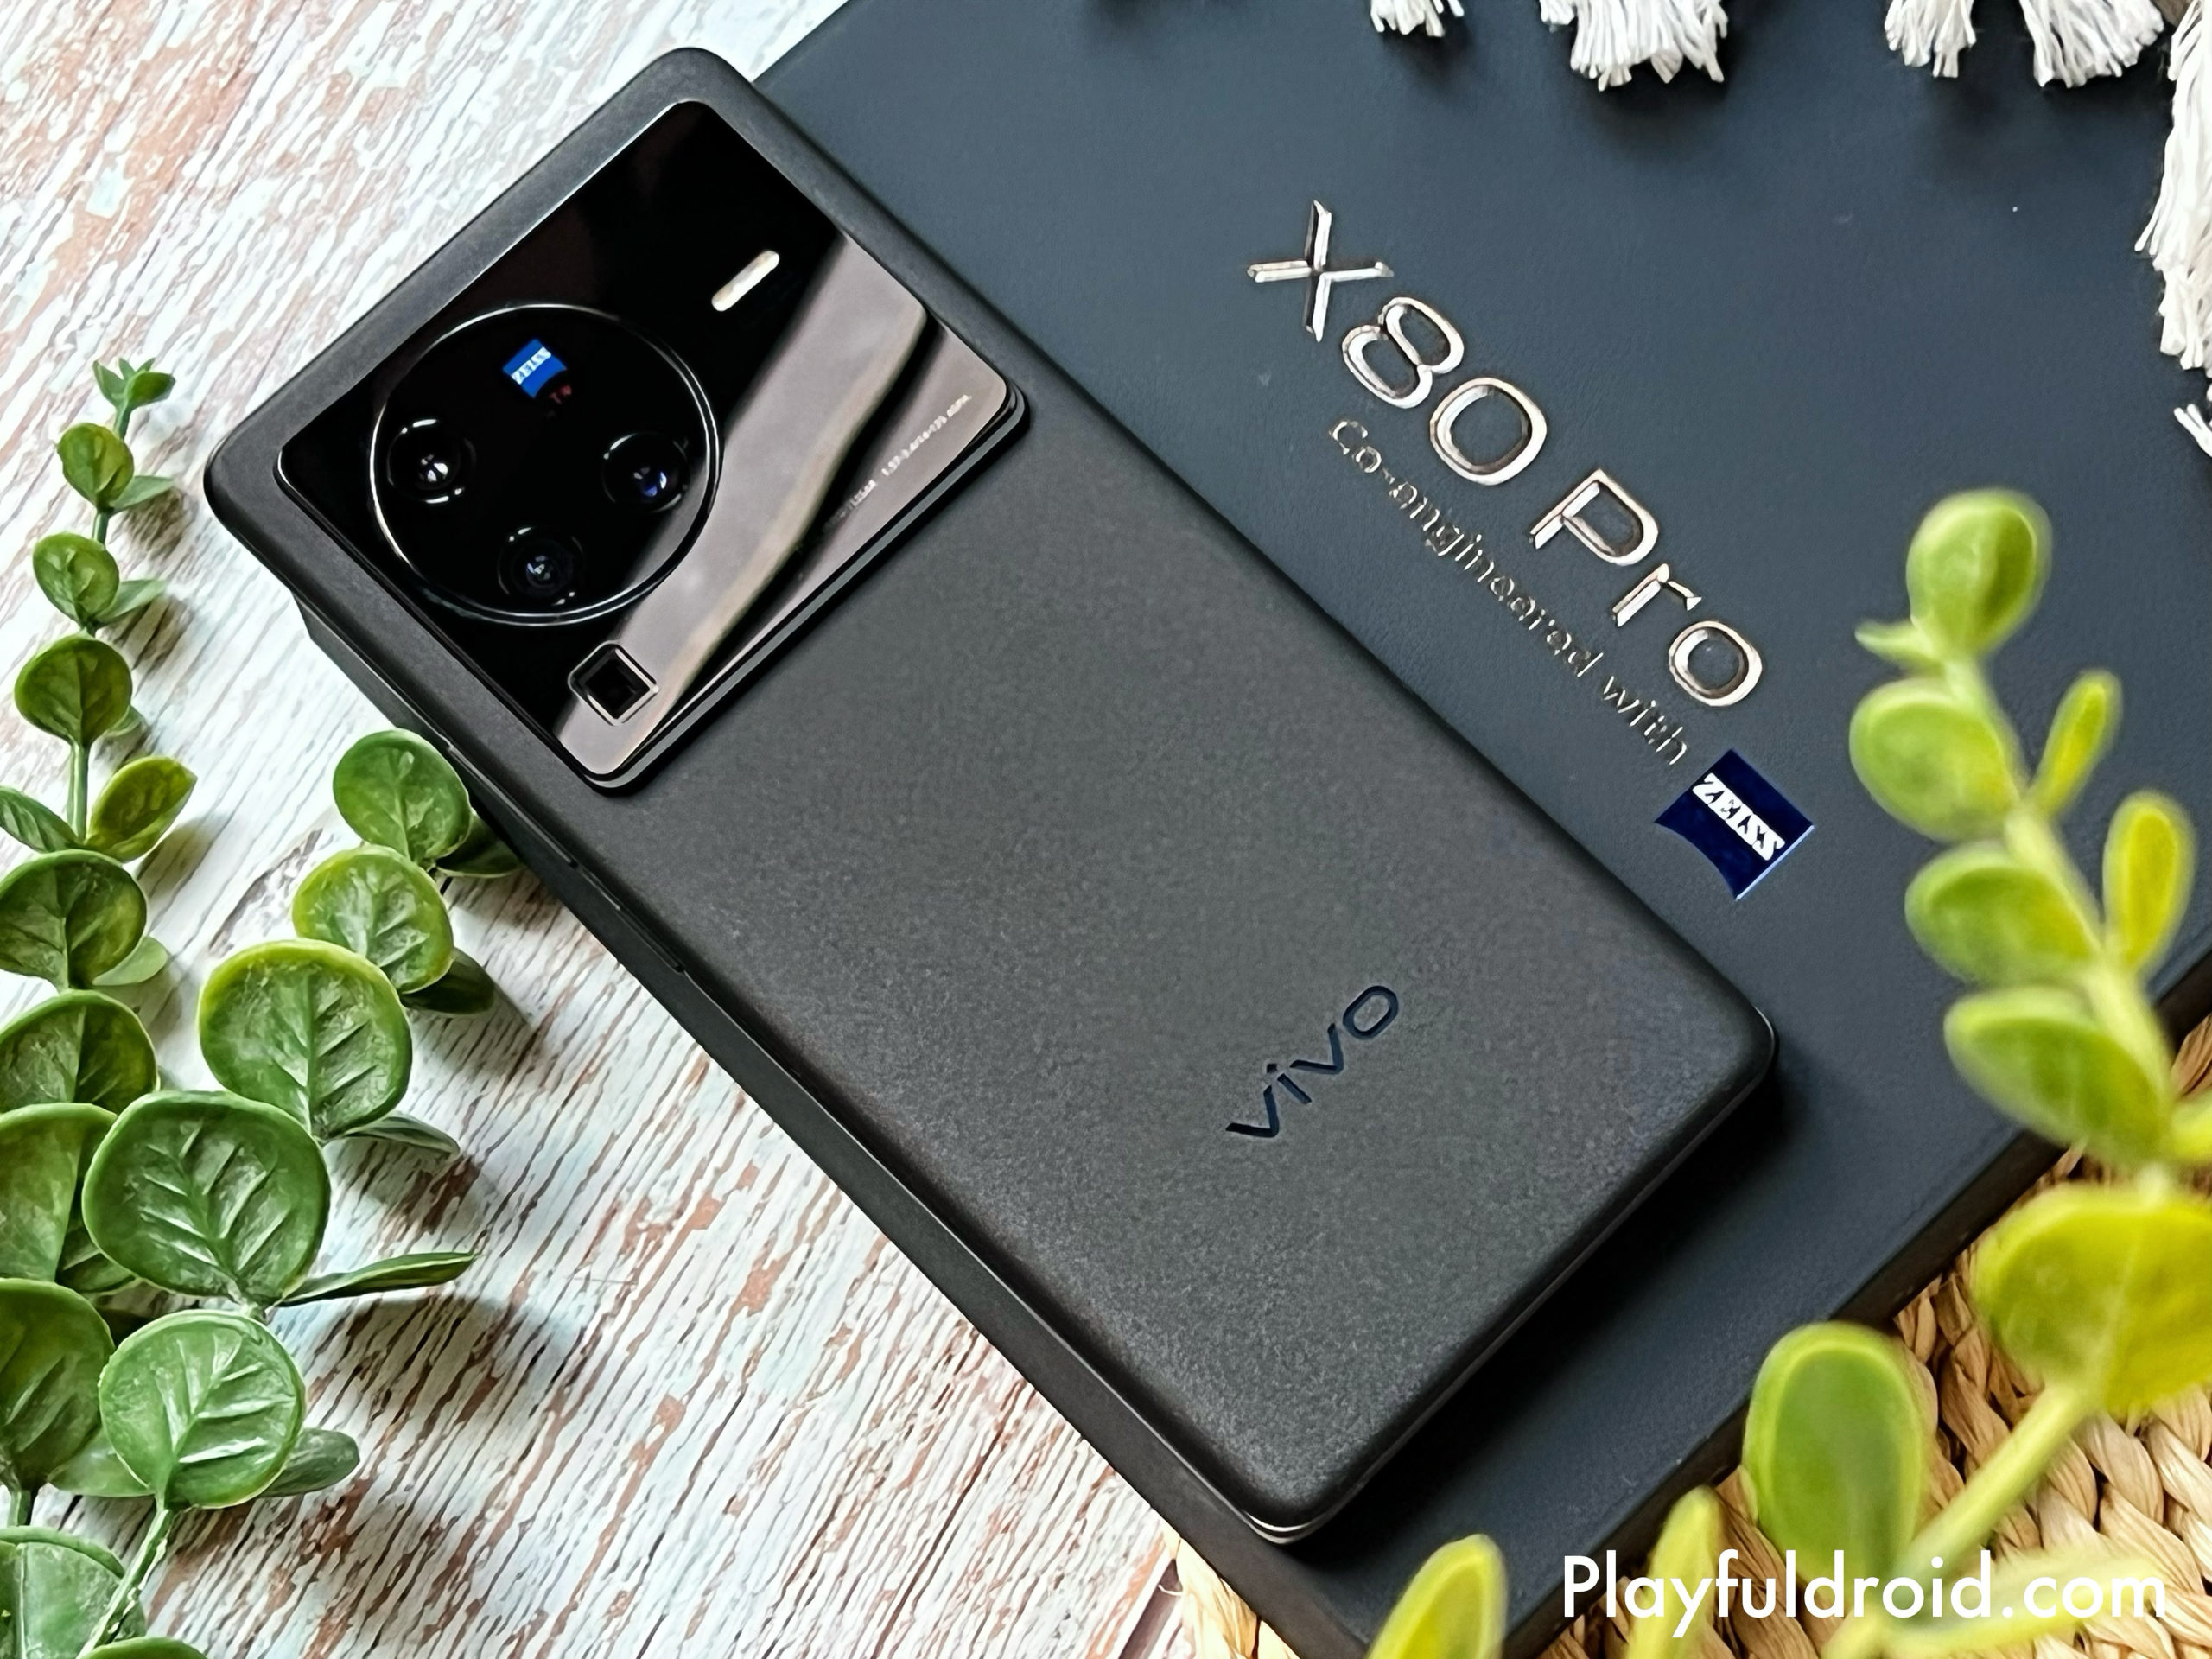 Vivo X80 Pro PUBG Mobile Gaming test  Snapdragon 8 Gen 1, 120Hz Display 